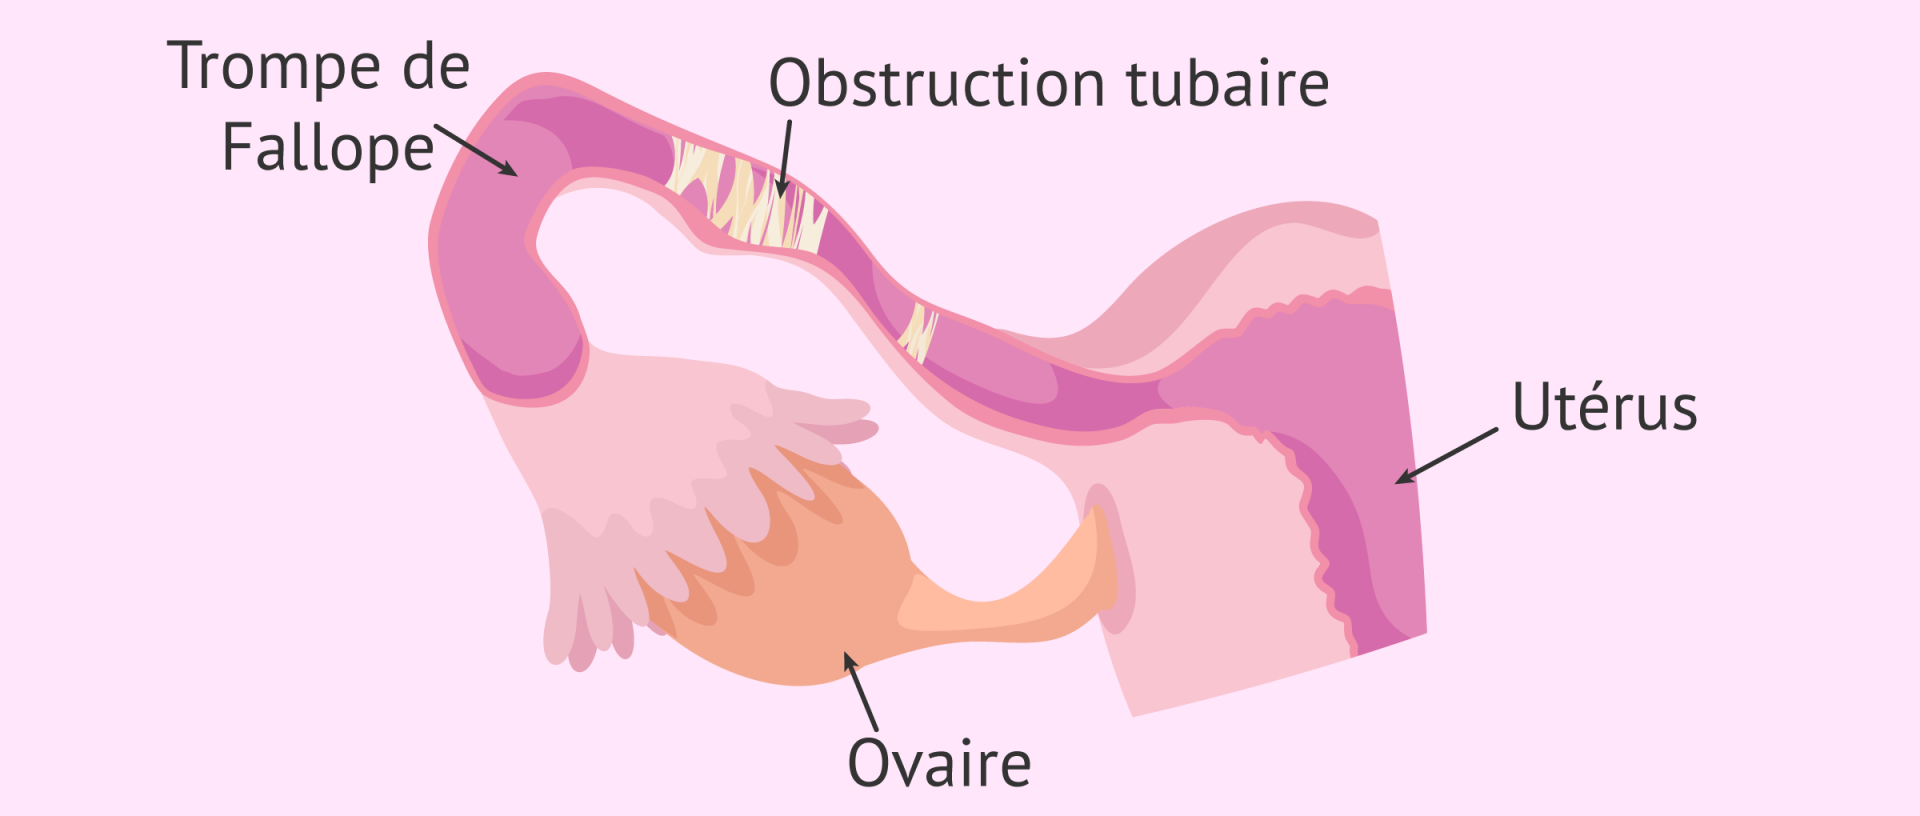 Obstruction tubaire